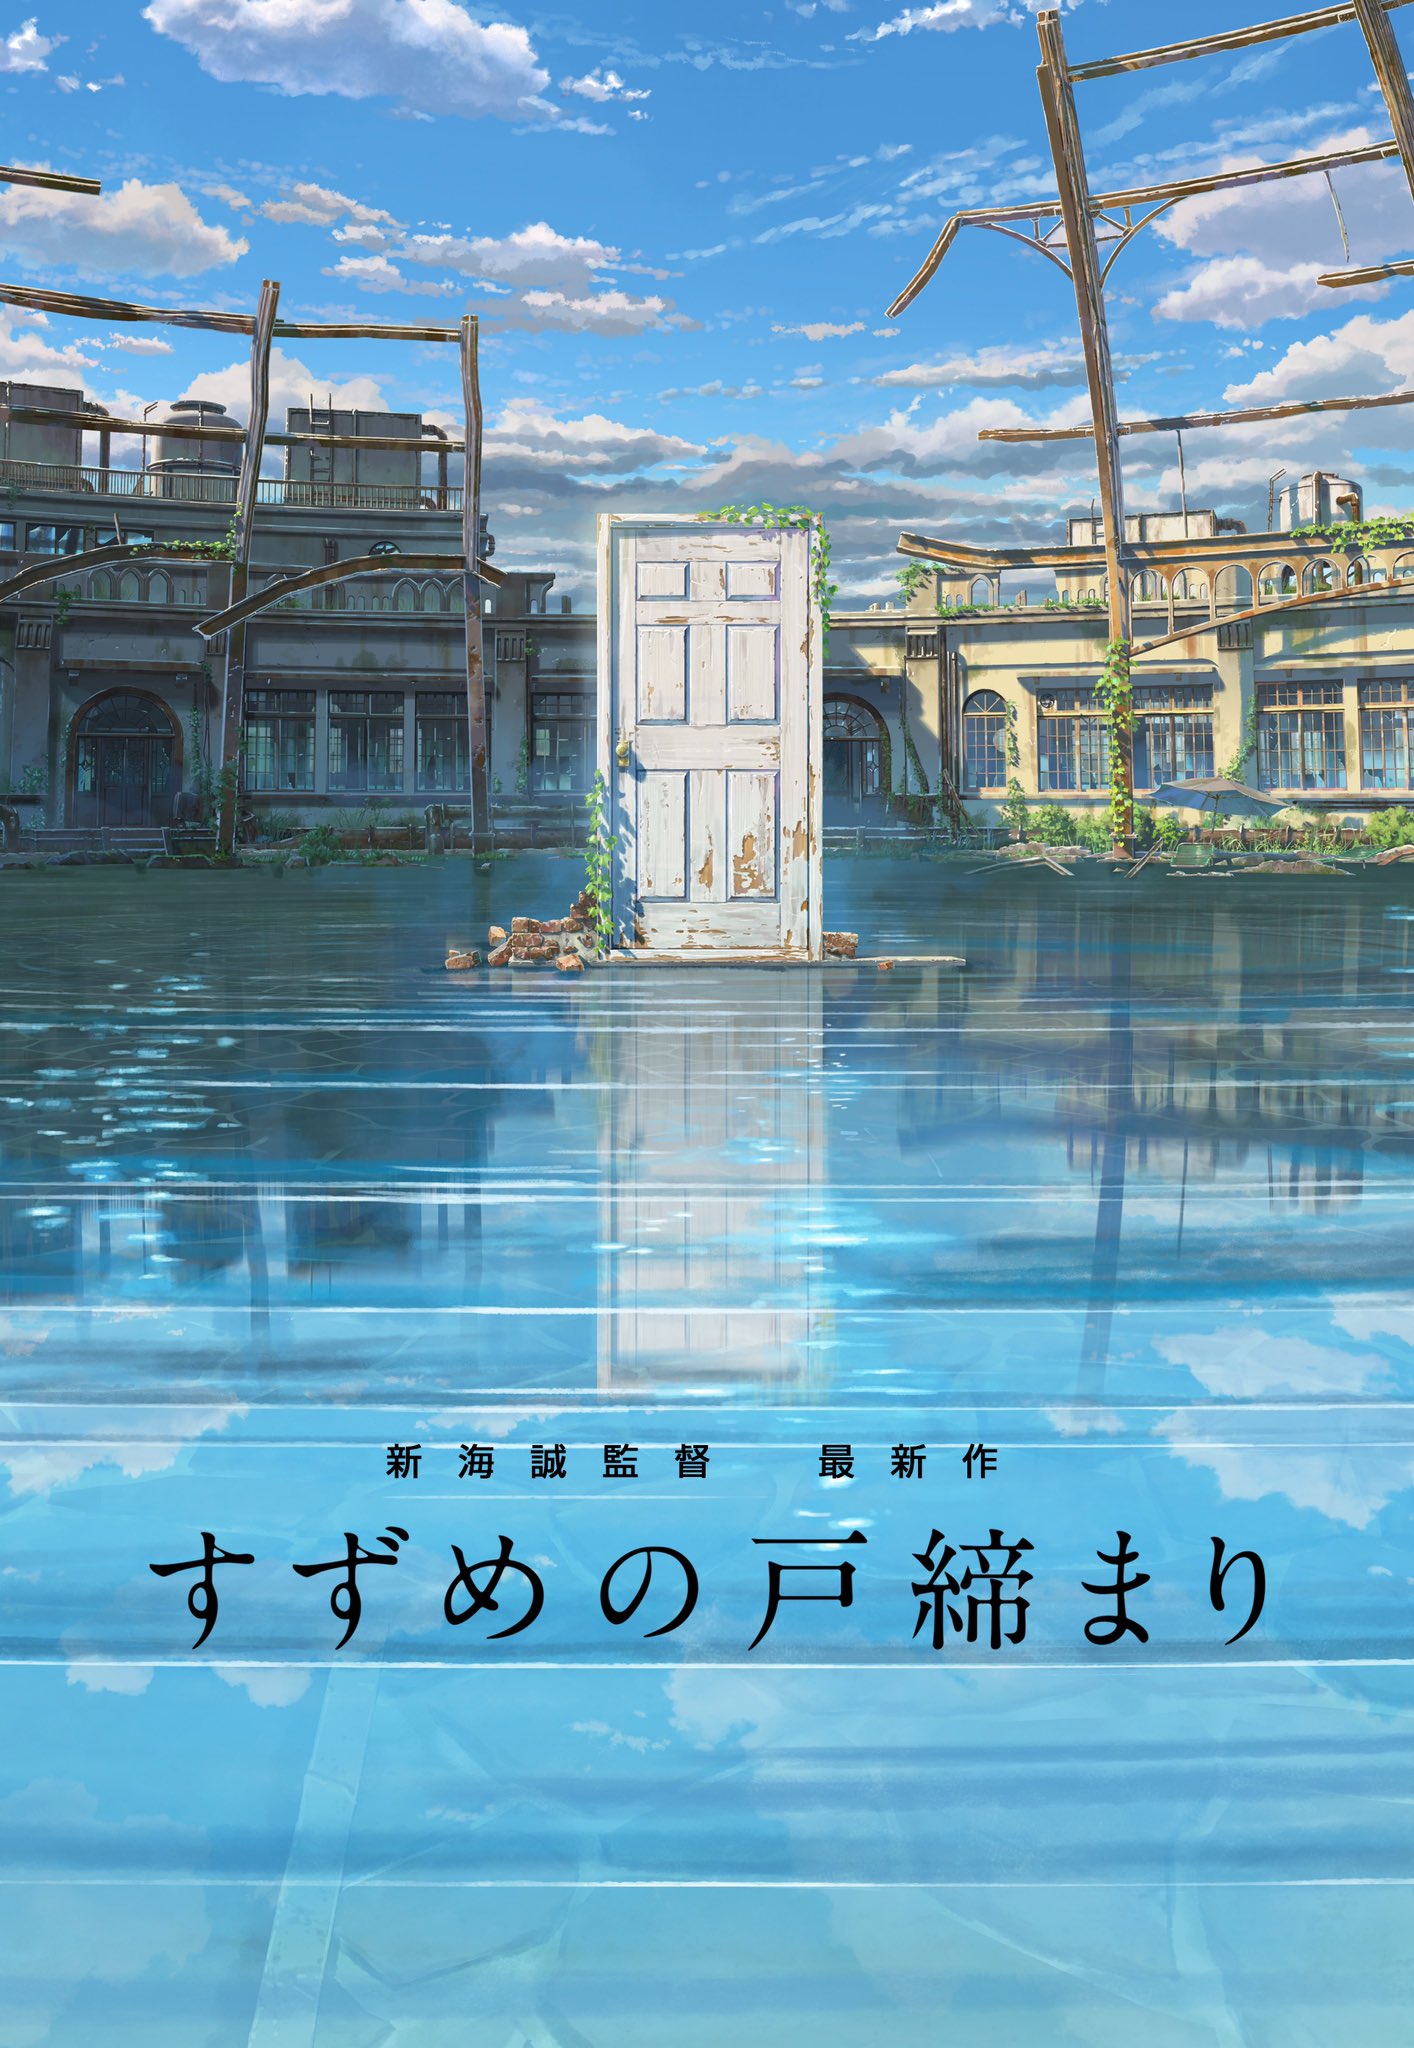 Catsuka teaser poster of Suzume no Tojimari, the new animated movie by Makoto Shinkai (Your Name). #すずめの戸締まり